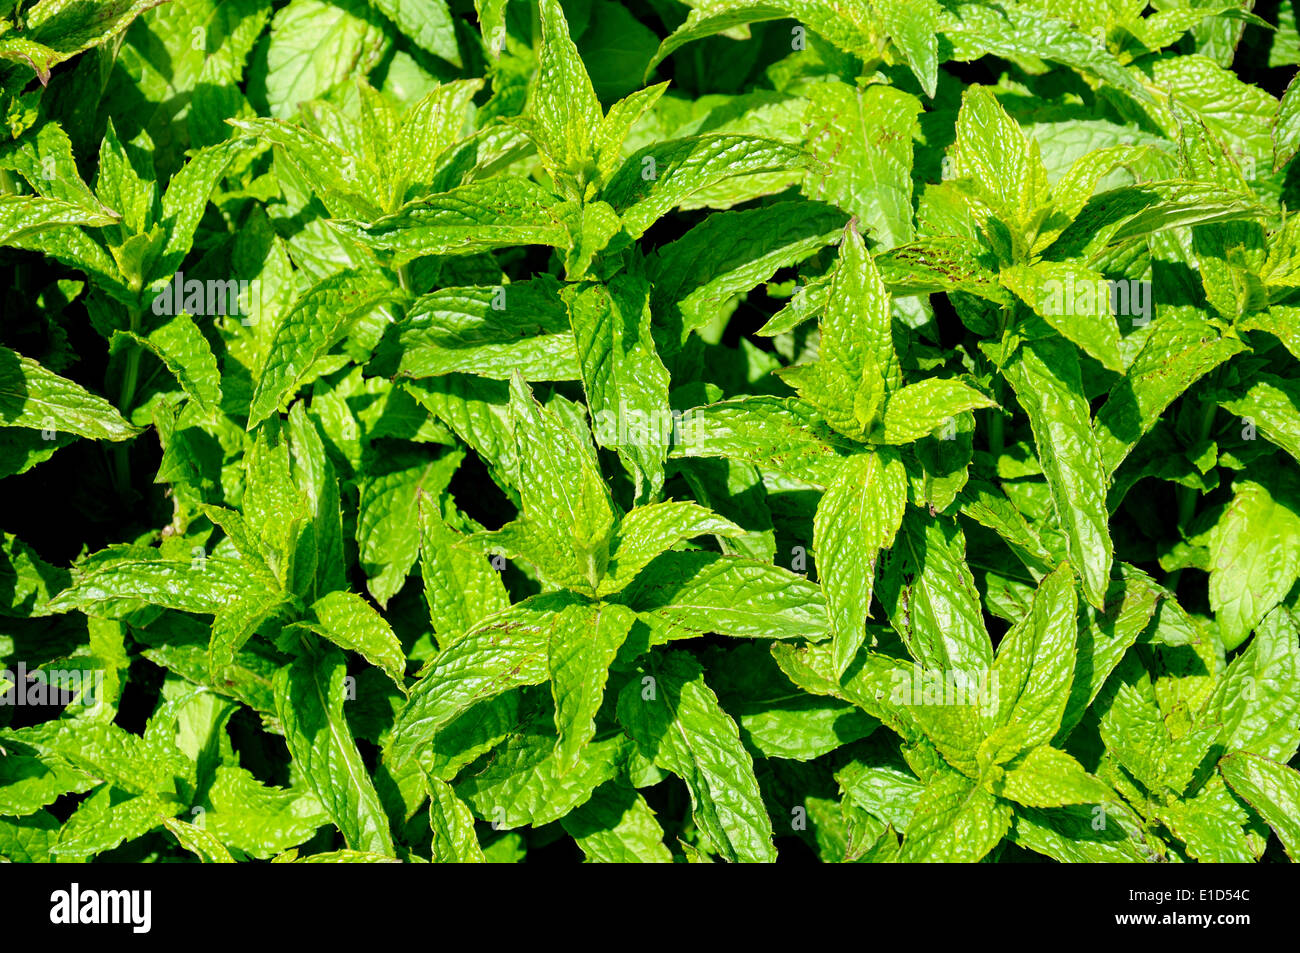 Garden mint leaves background. Stock Photo